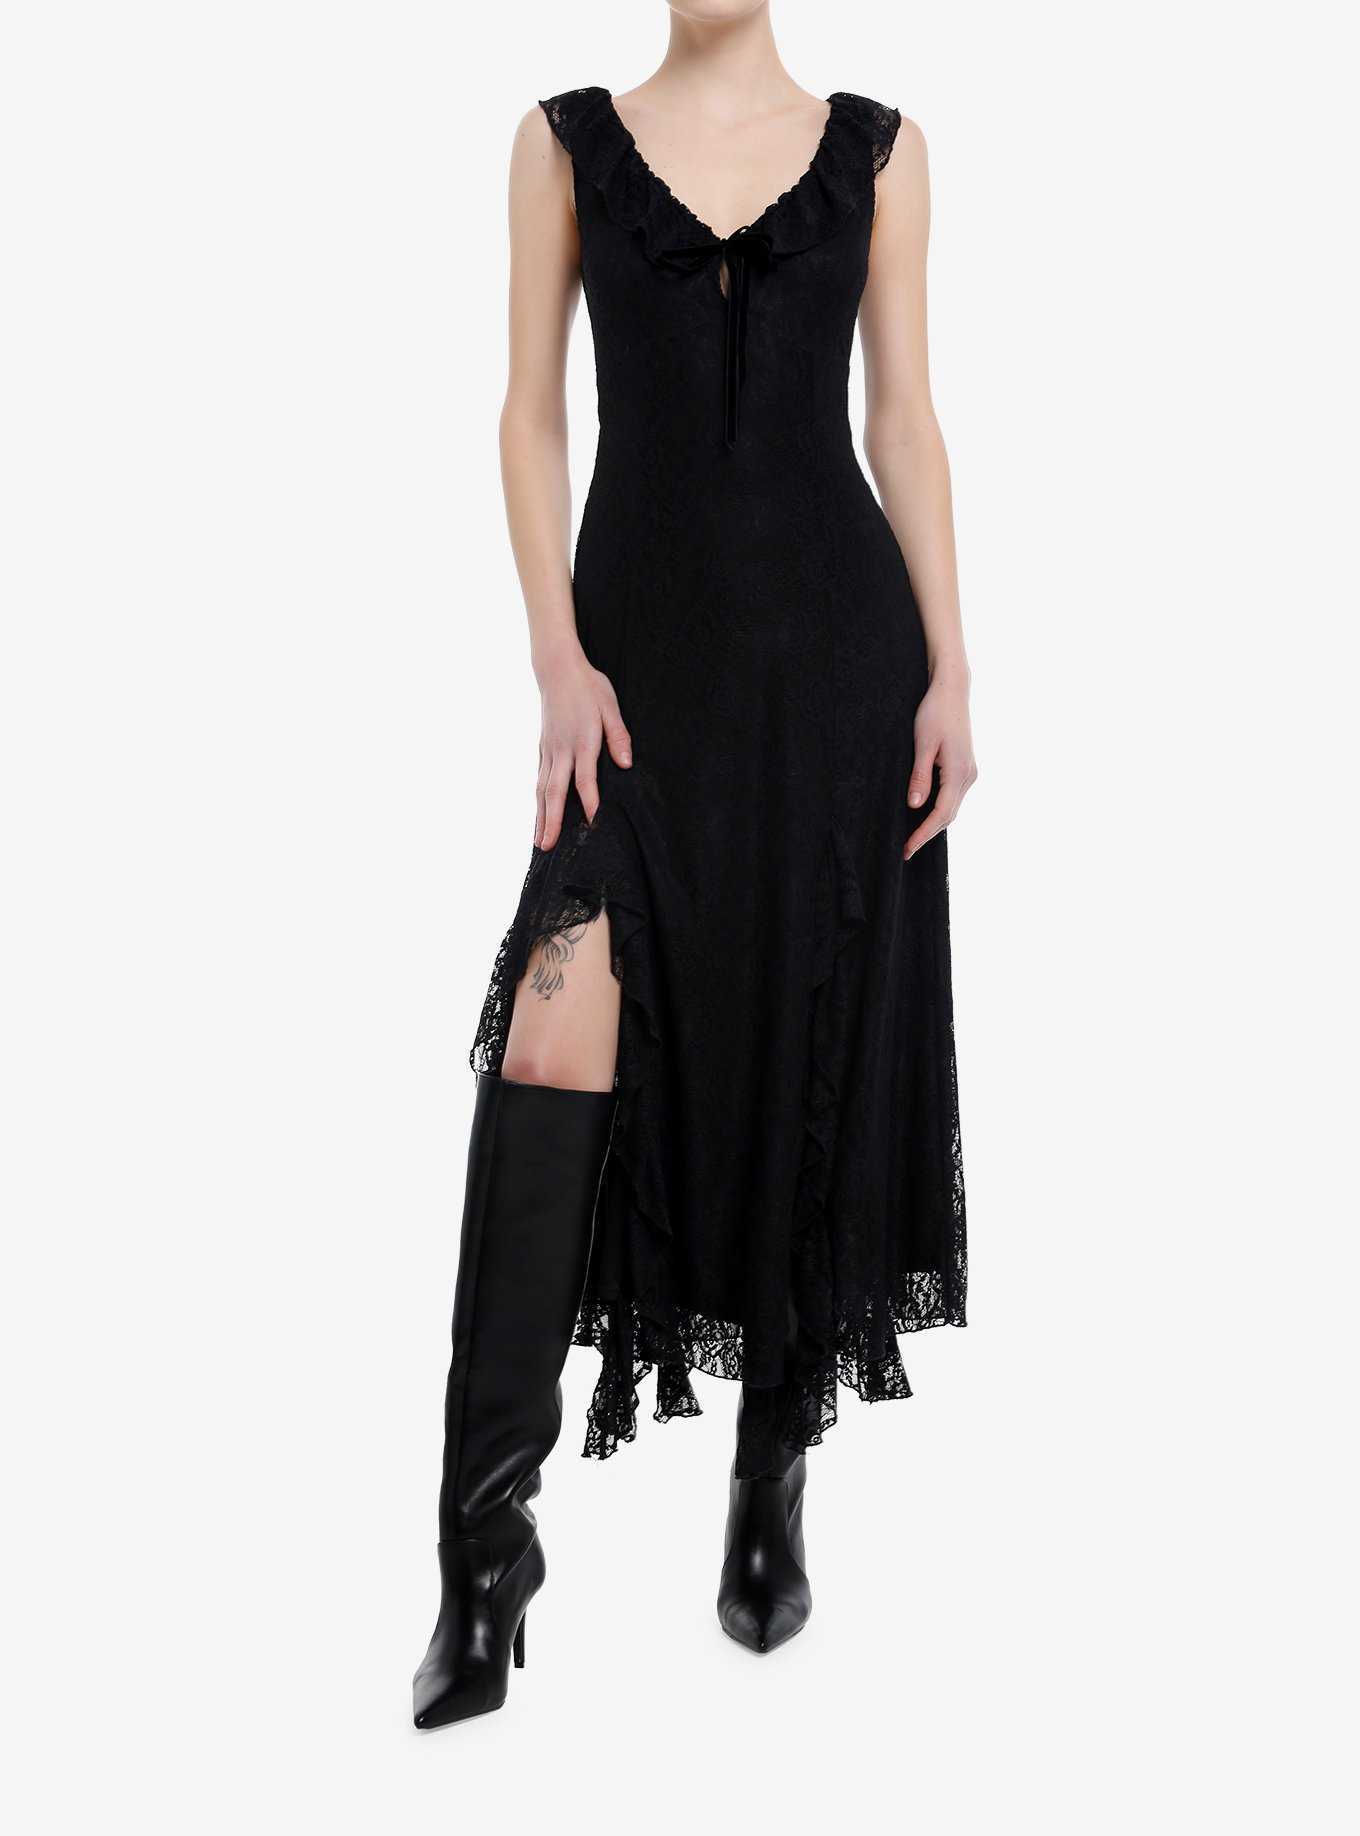 Second Life Marketplace - *Goth Mommy* Black Lace Babydoll Dress